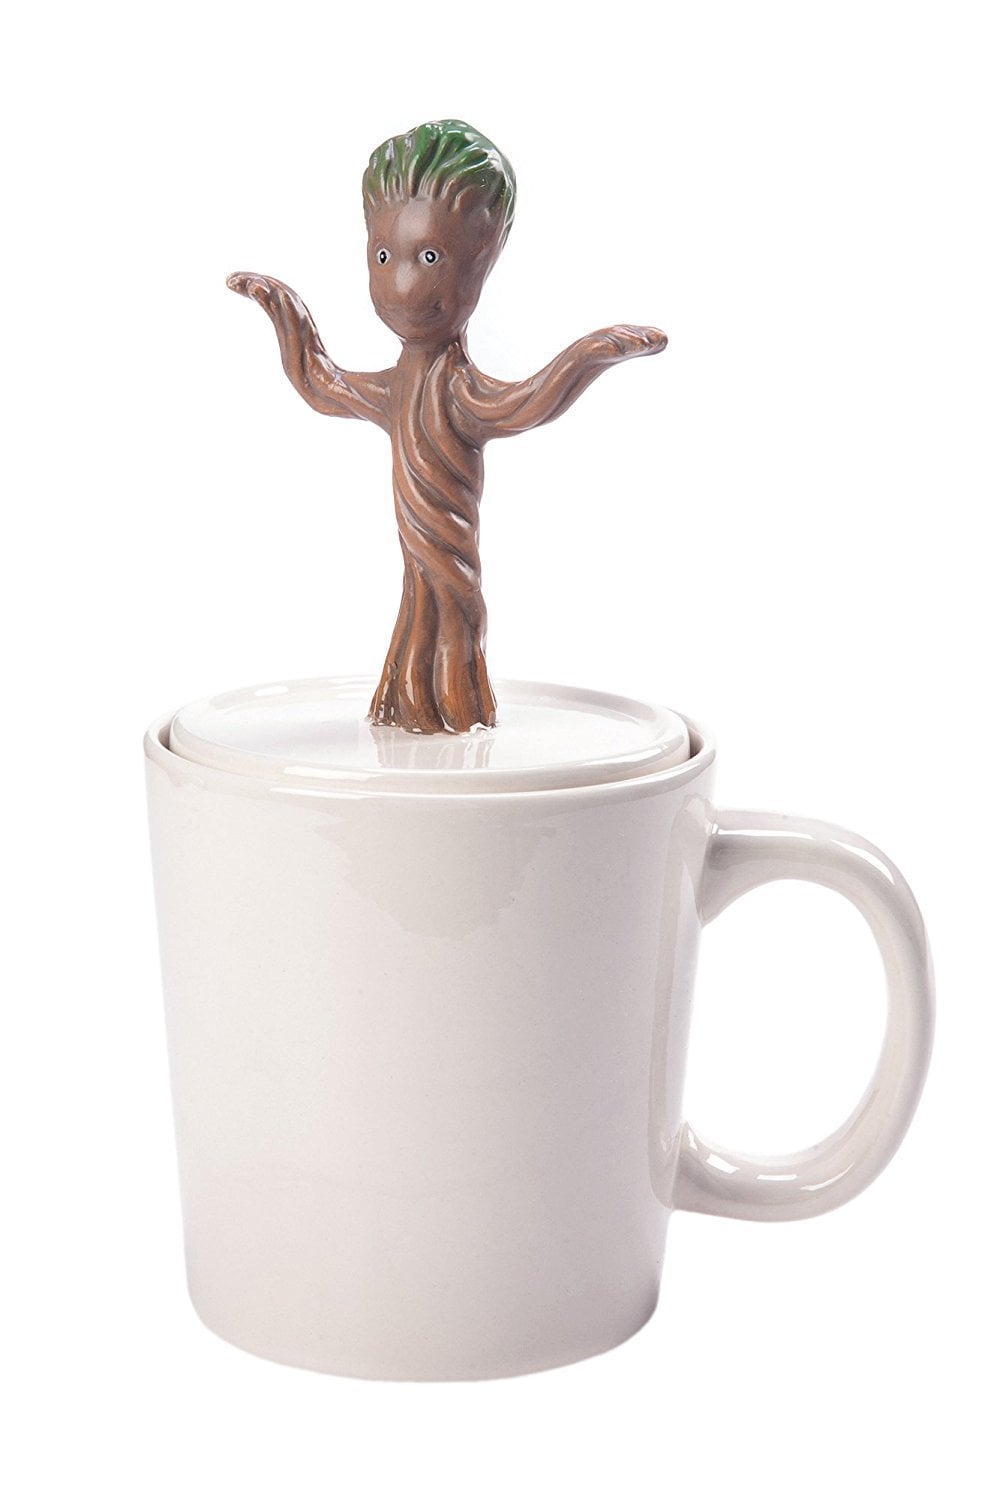 CafePress Guardians Baby Groot Large Mug 1626623891 